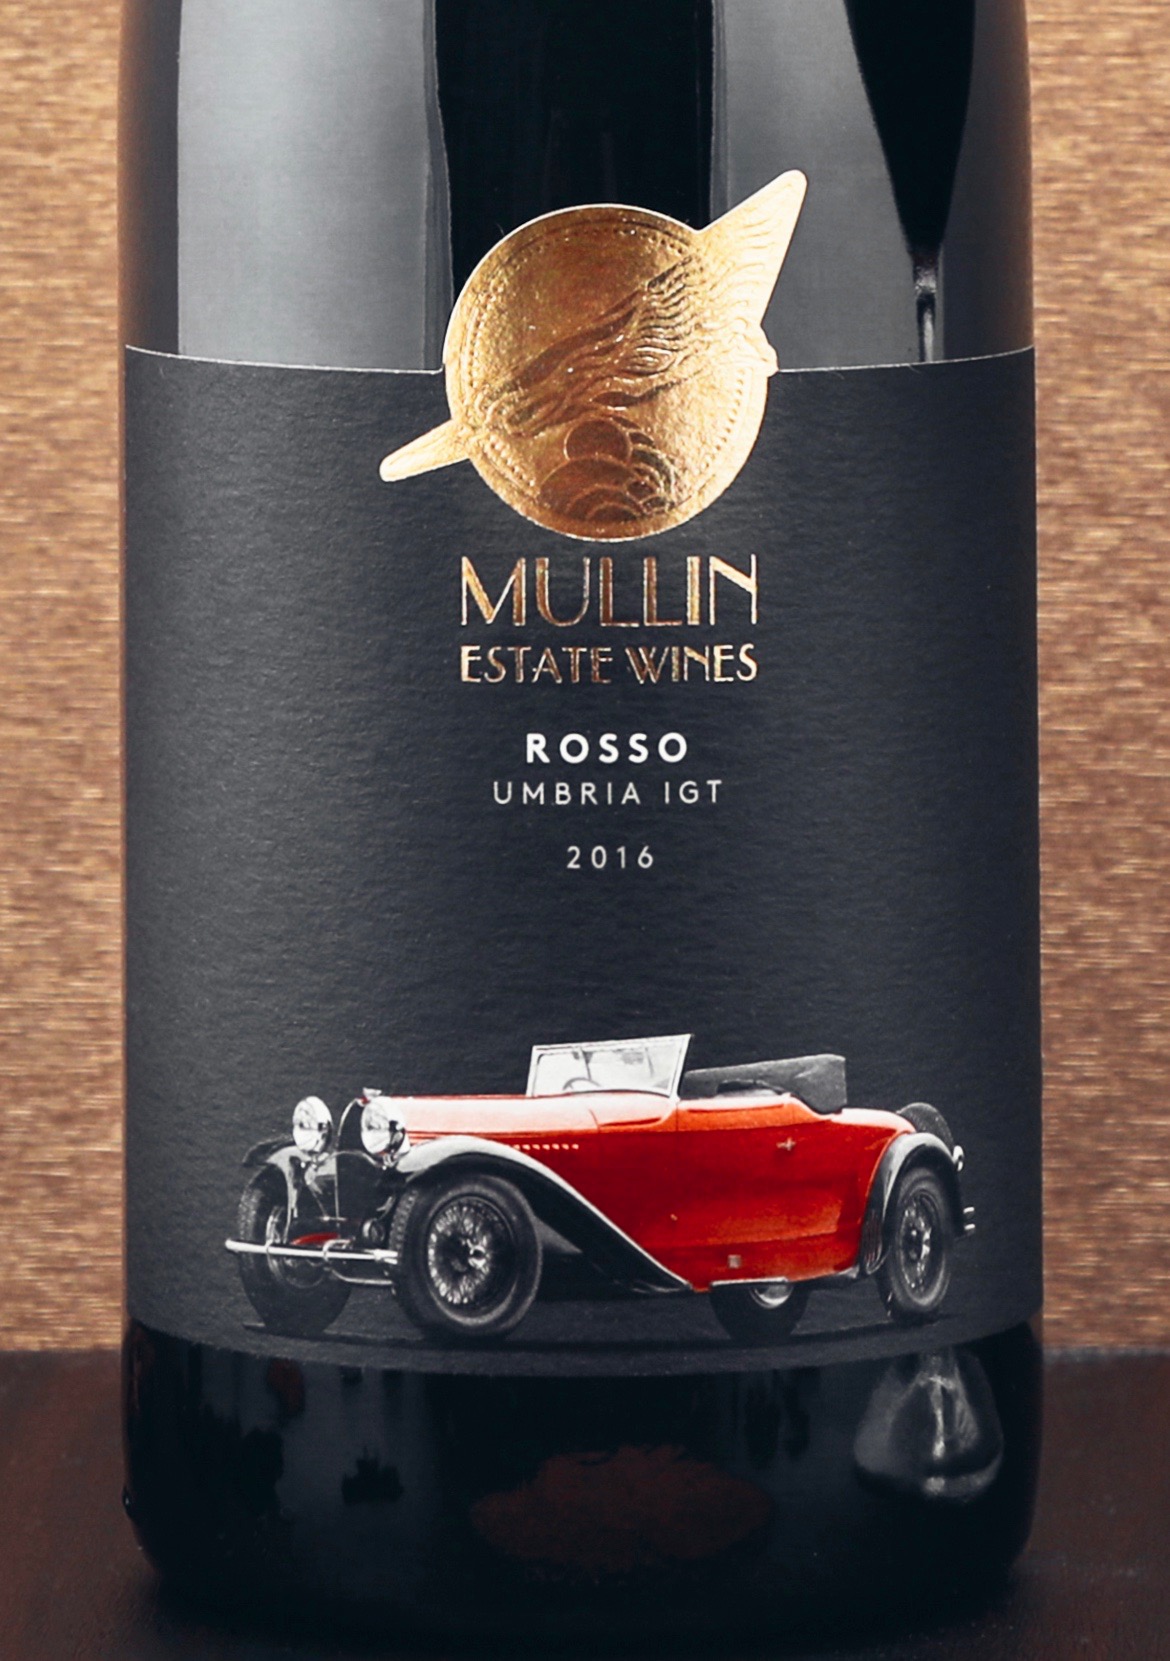 Mullin wine, Peter Mullin shares the fruits of his Italian vineyard, ClassicCars.com Journal